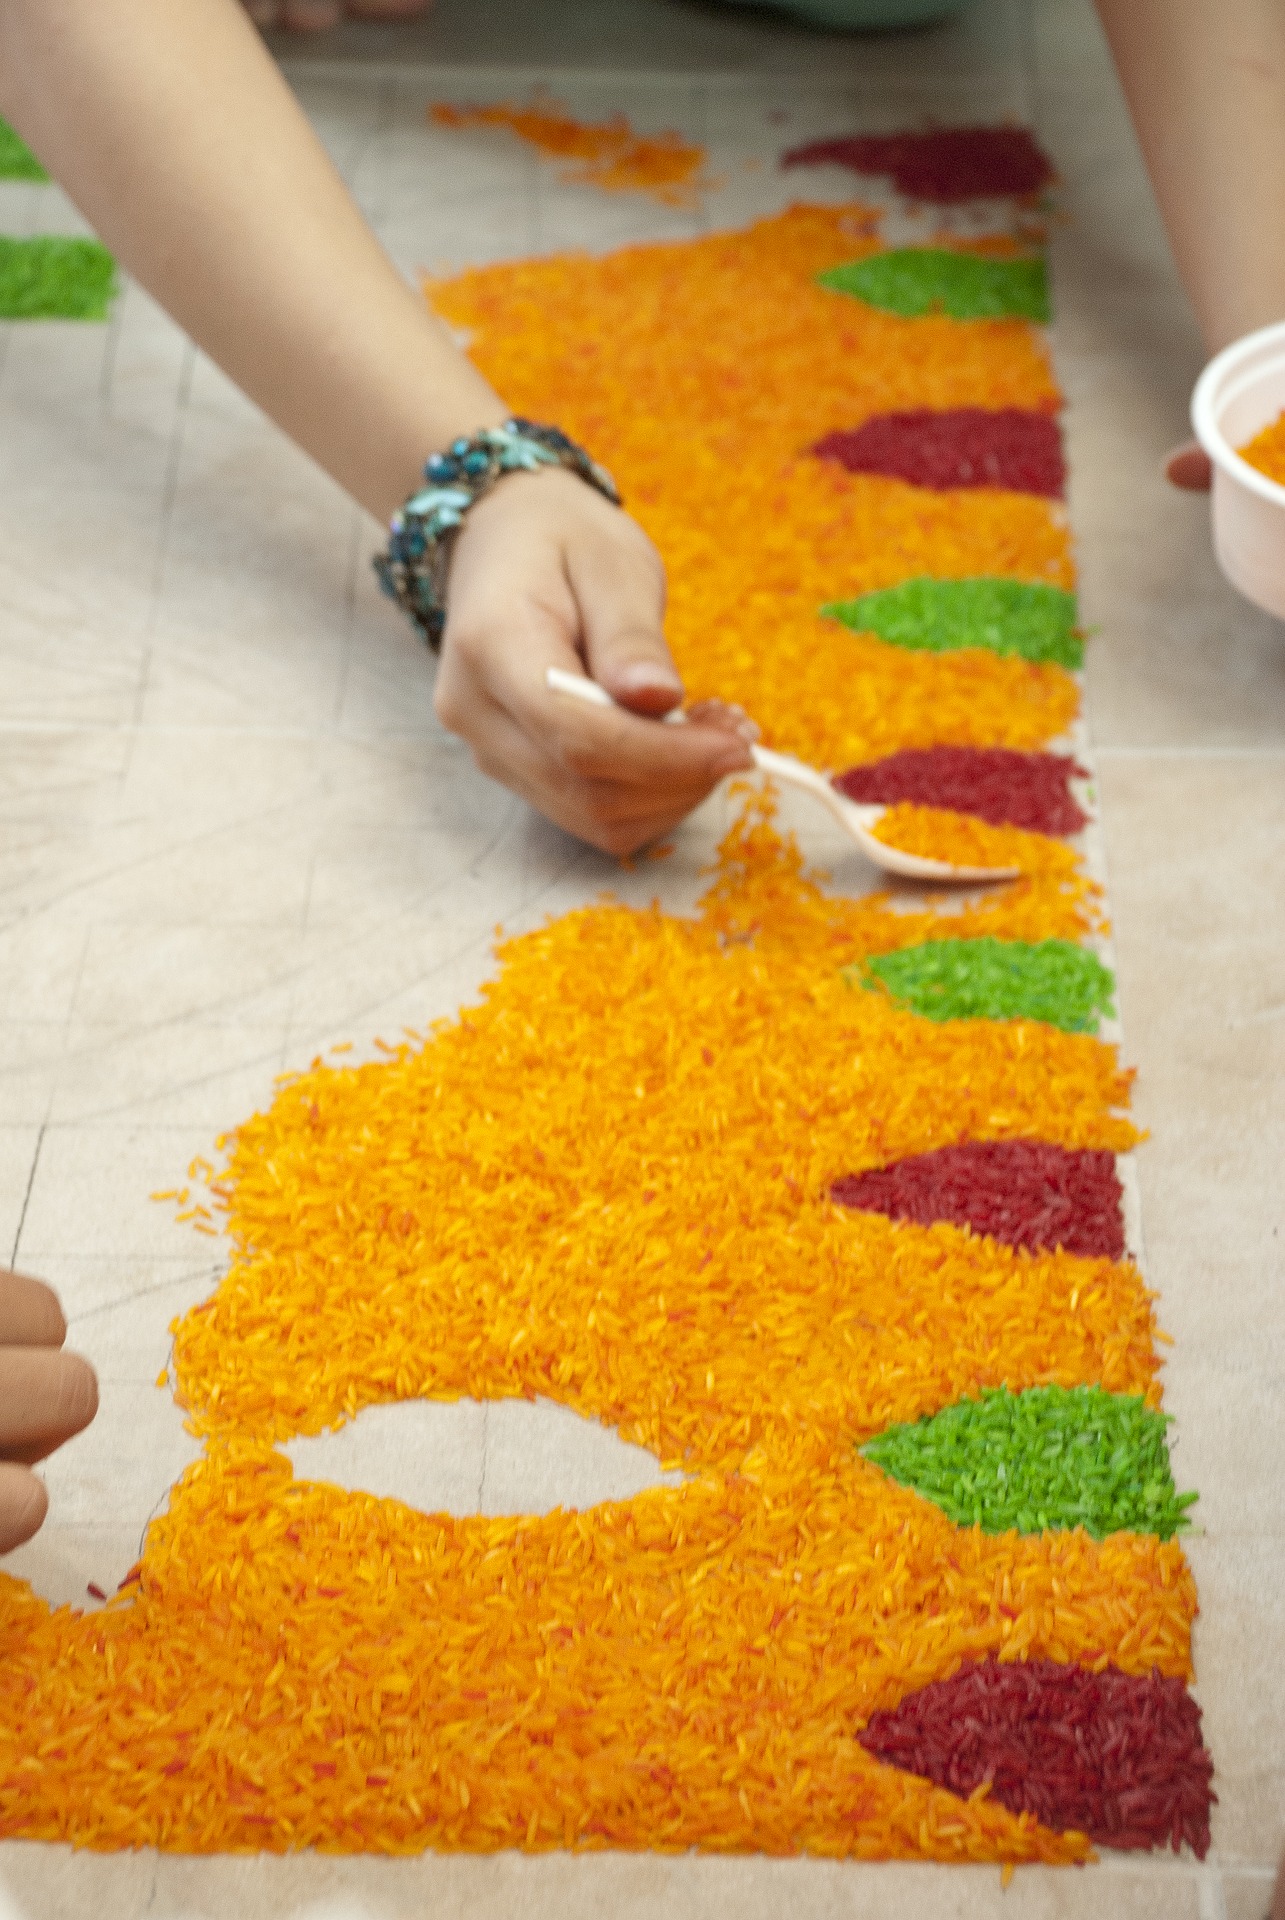 colorful rice in a pattern, rangoli art